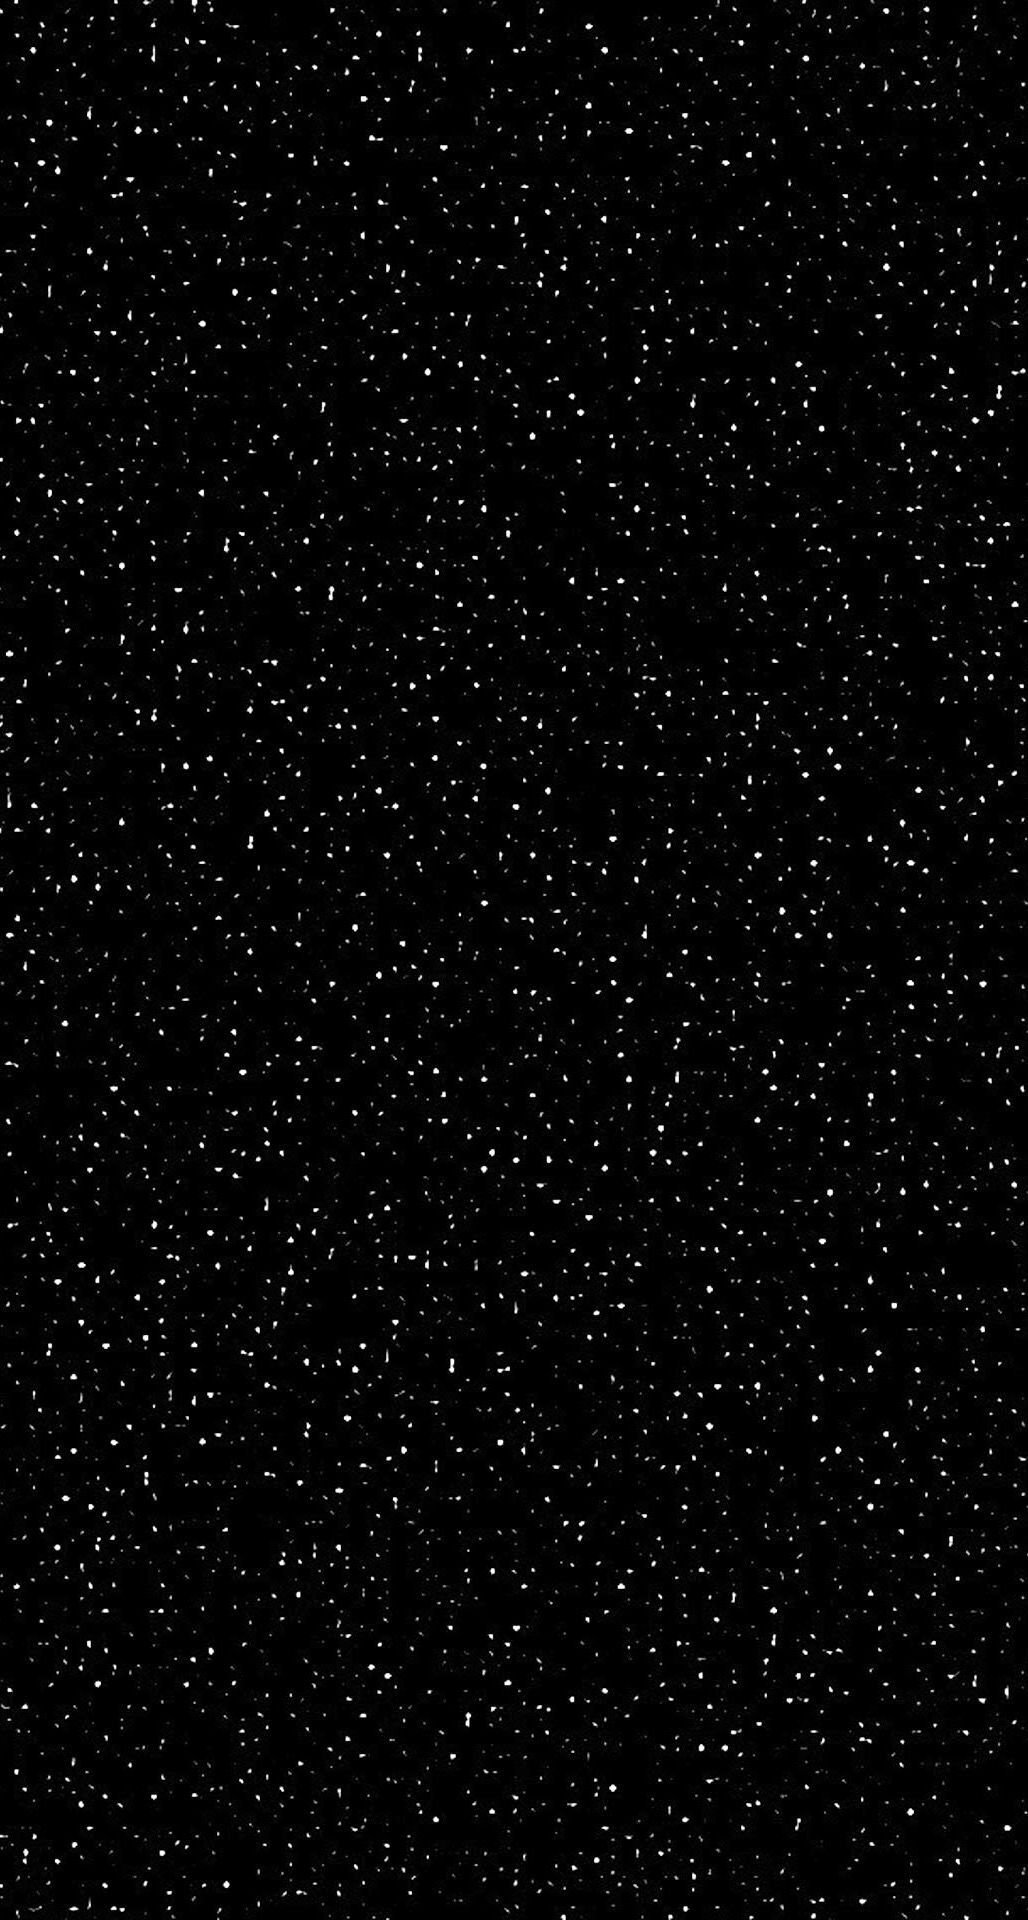 Black and White Starry Night  Free Stock Photo